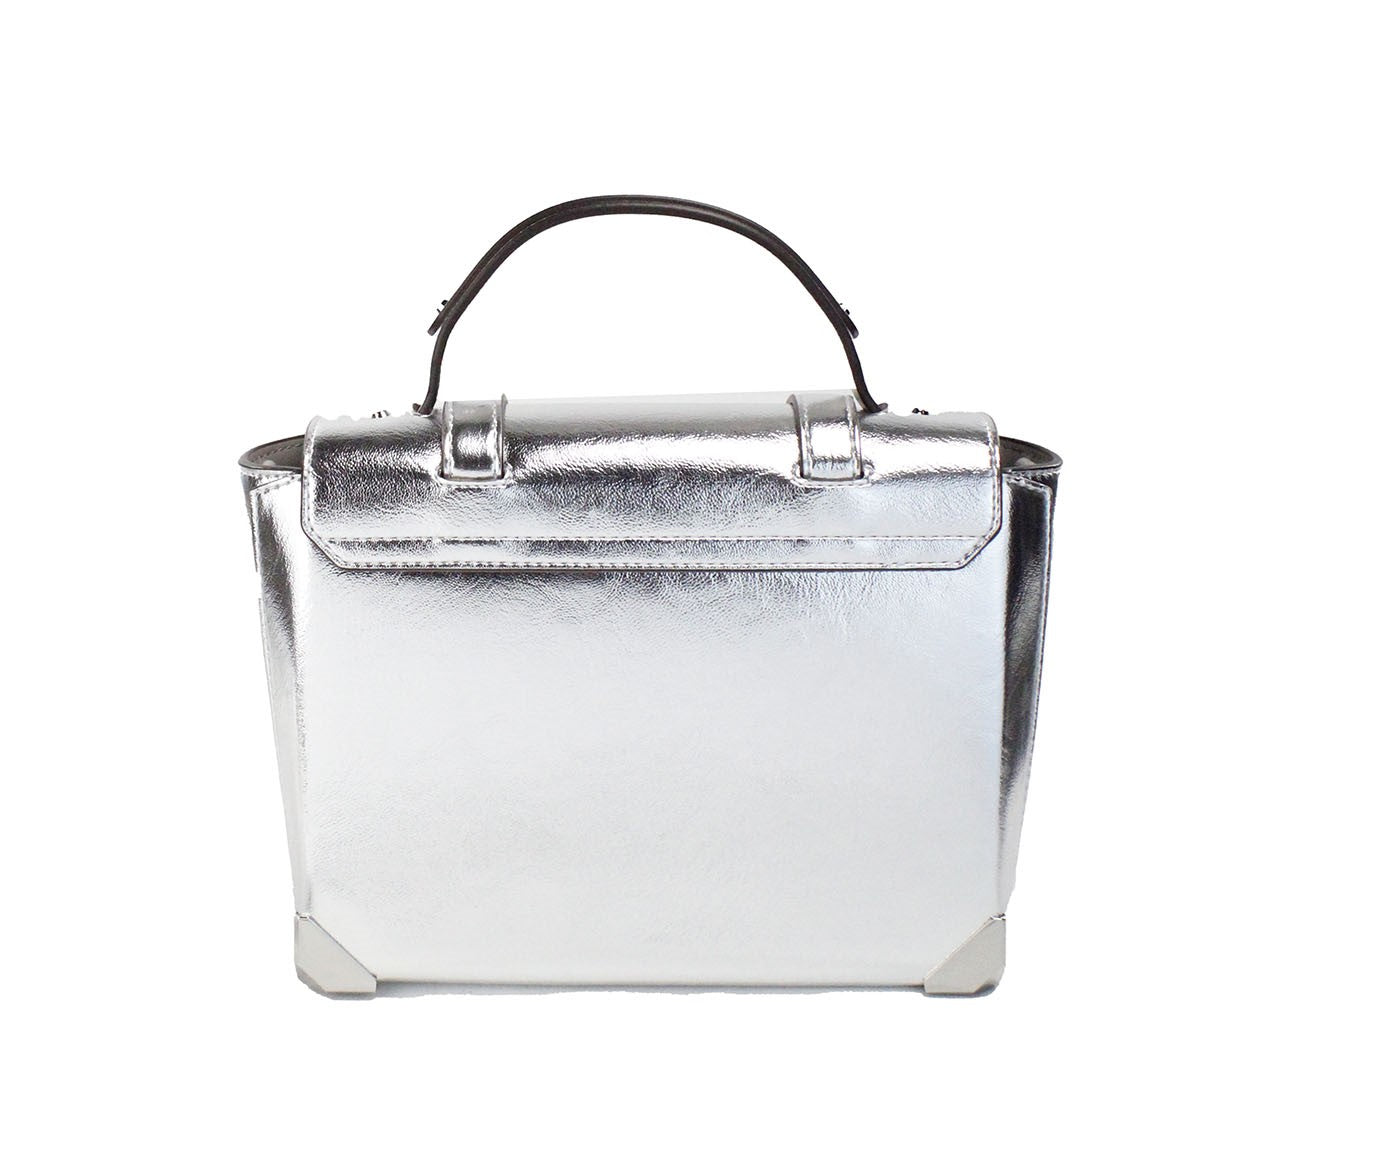 Michael Kors Manhattan Medium Silver Leather Top Handle Satchel Bag | Fashionsarah.com